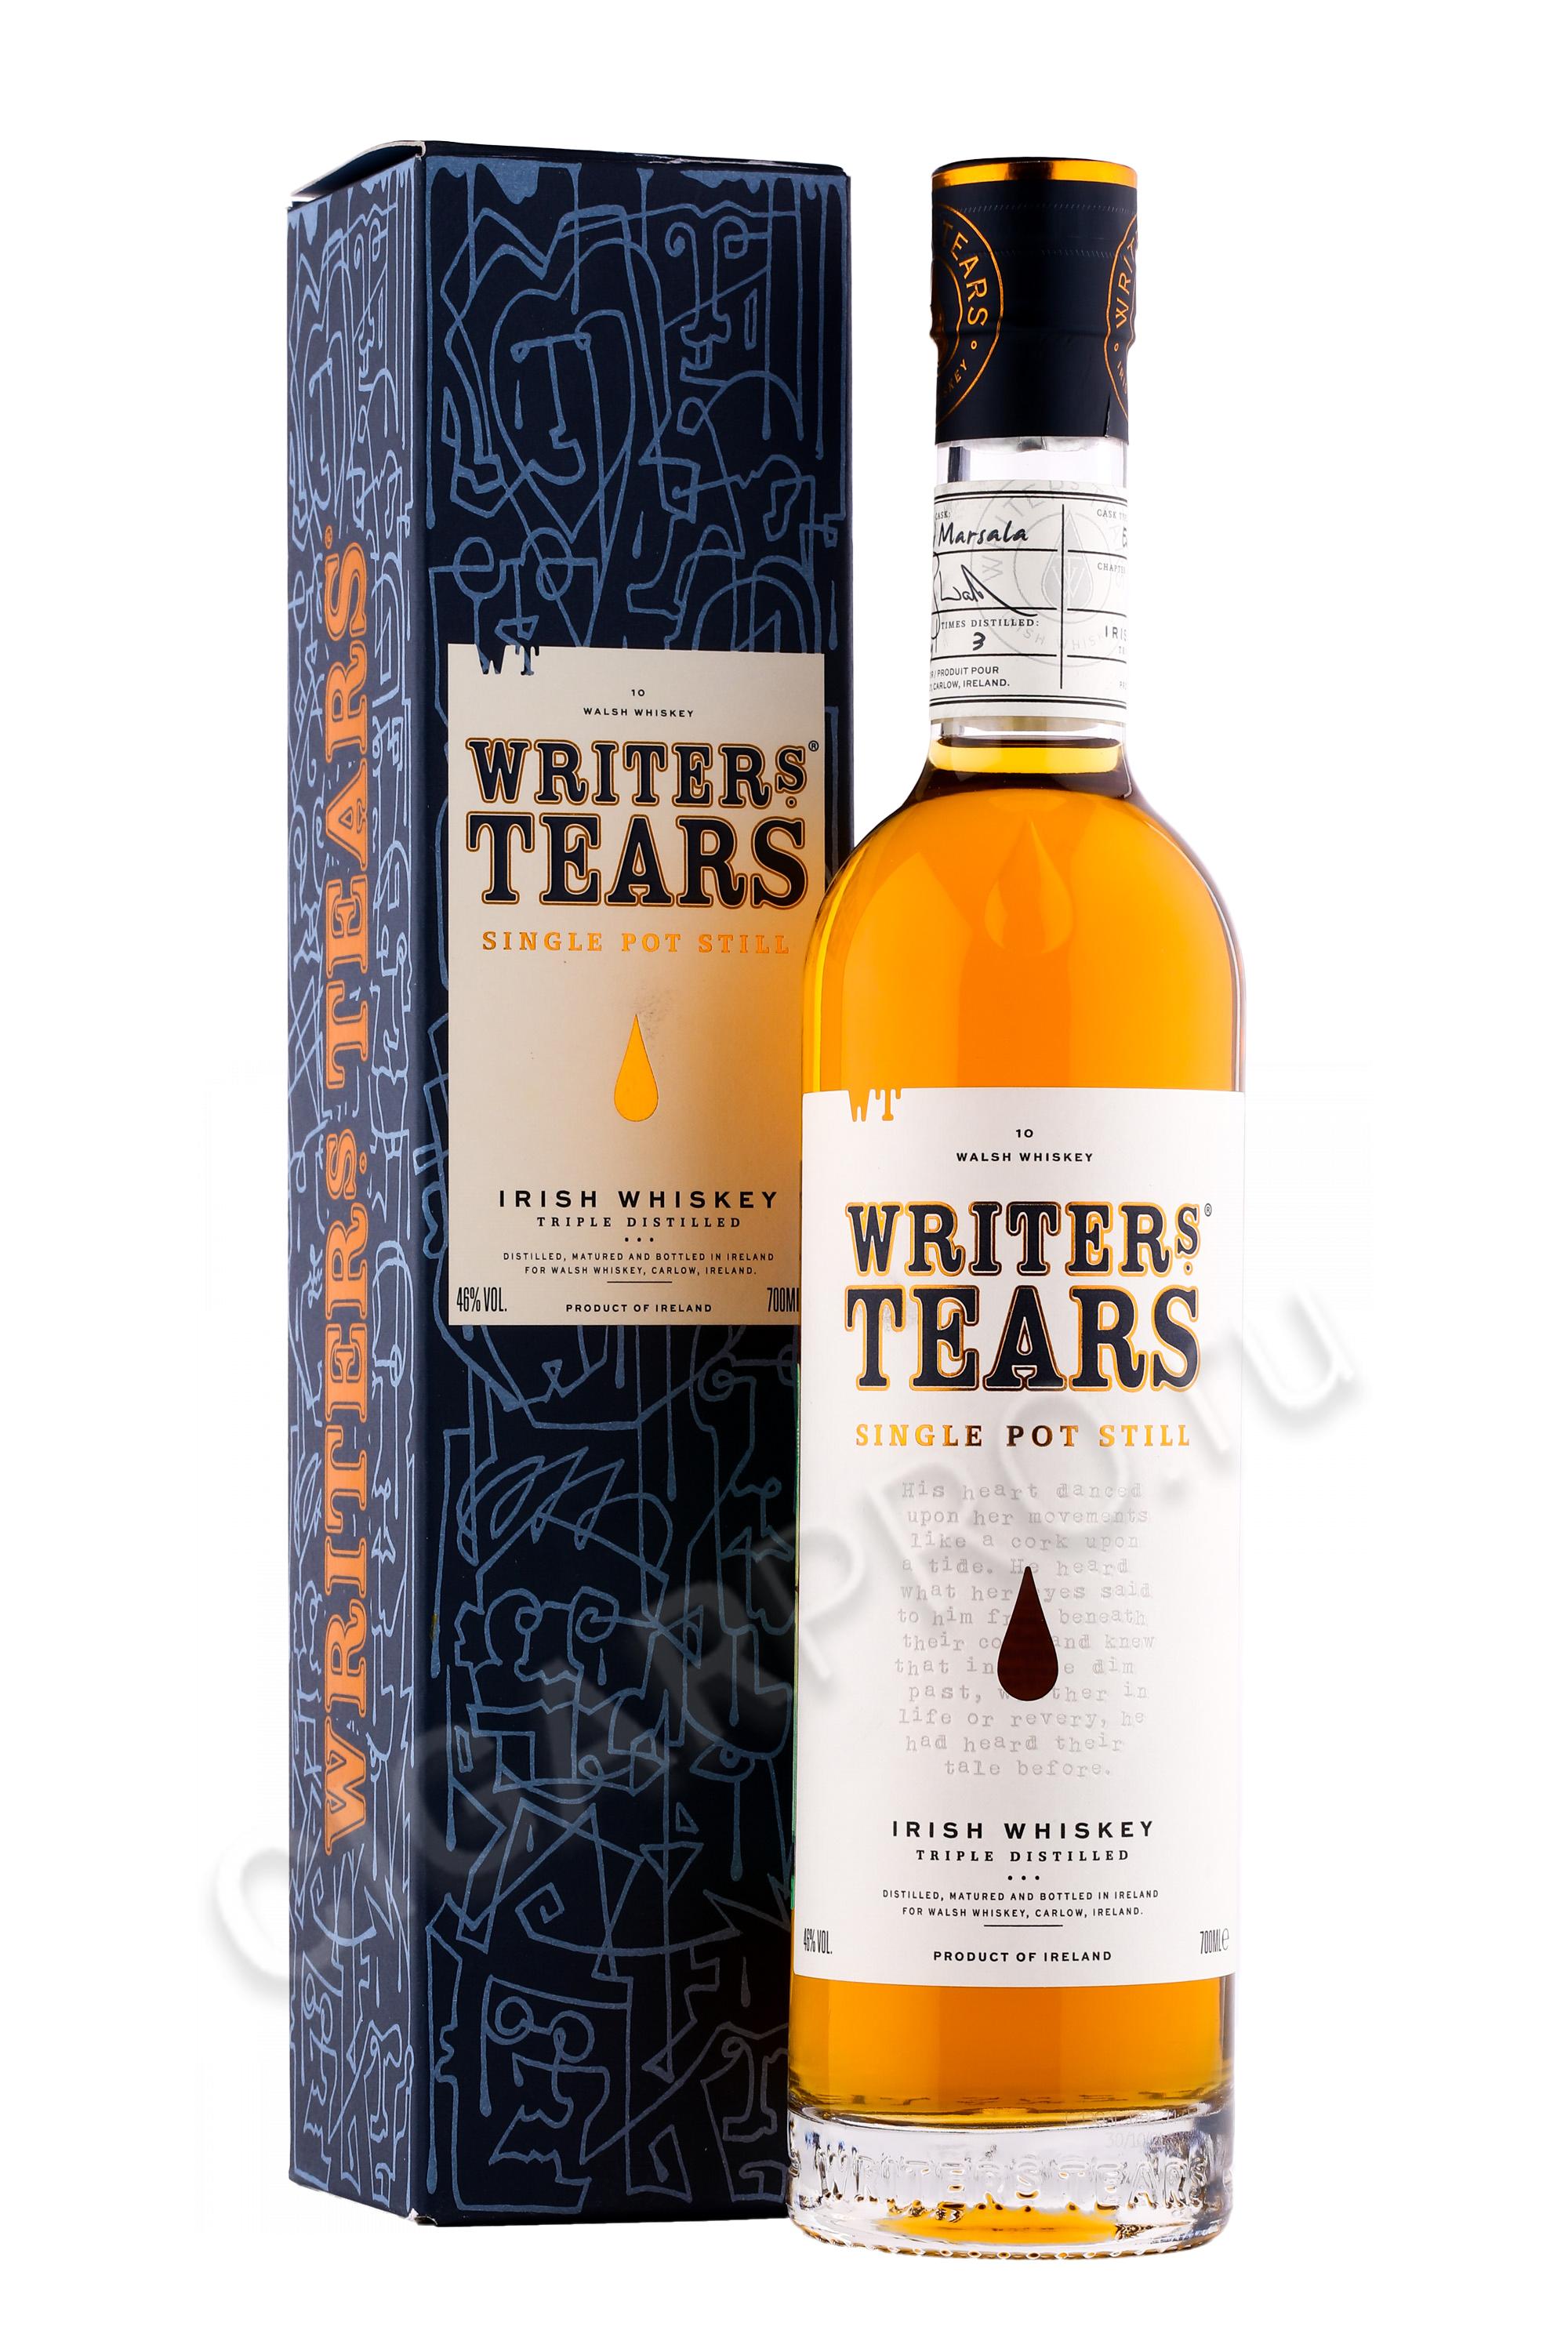 Writers tears 0.7. Виски райтерс Тирс. Writers tears виски фляжка. Виски Райтерз ТИРЗ Коппер пот. Виски сингл пот Стилл.